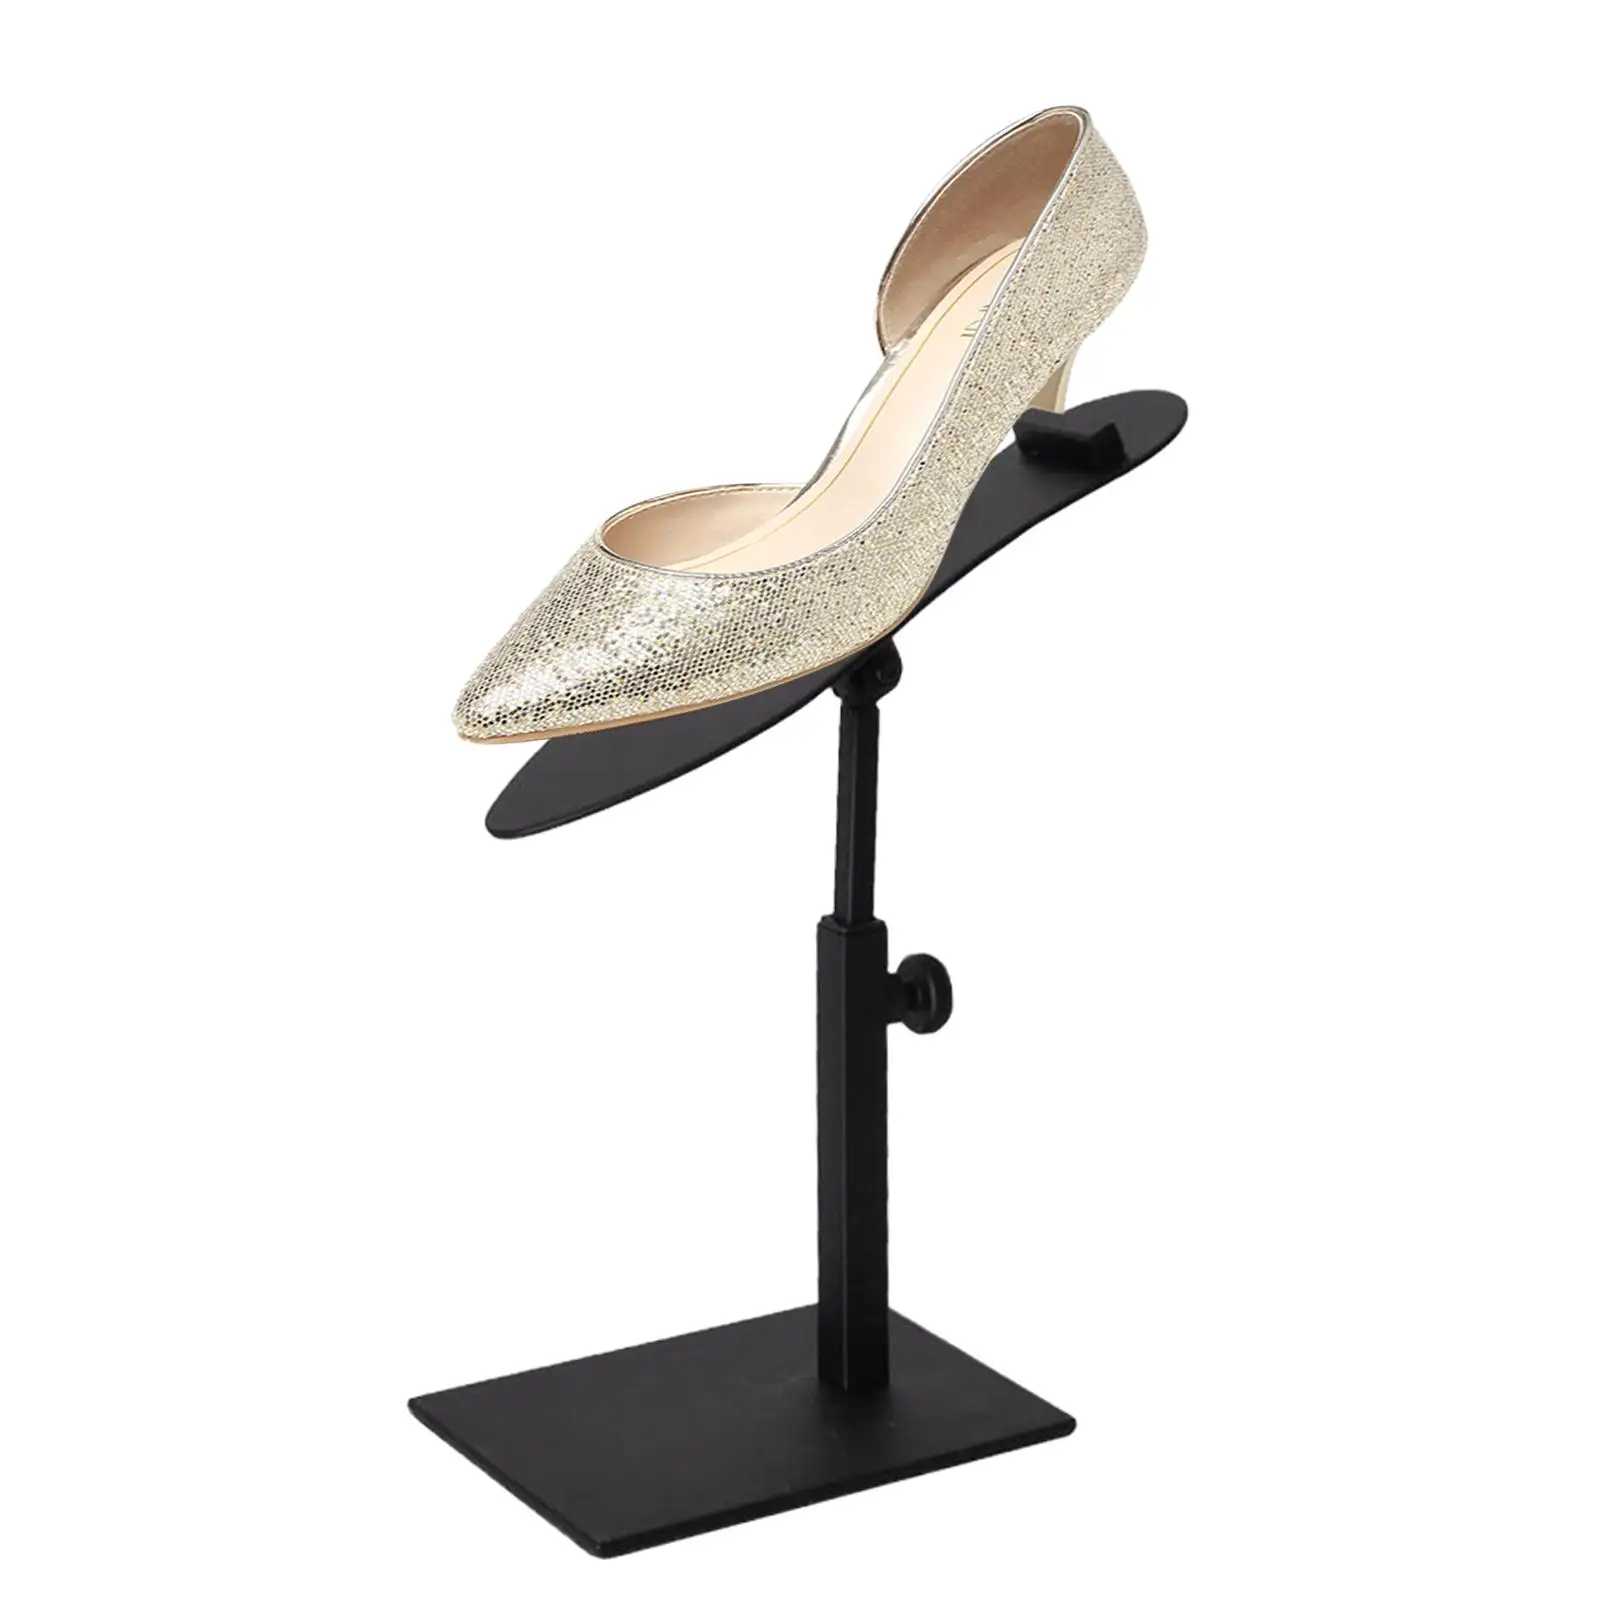 Shoe Display Stand Adjustable Height Simple High Heel Shoe Display Shelf for Desktop Retail Supply Countertop Store Commercial